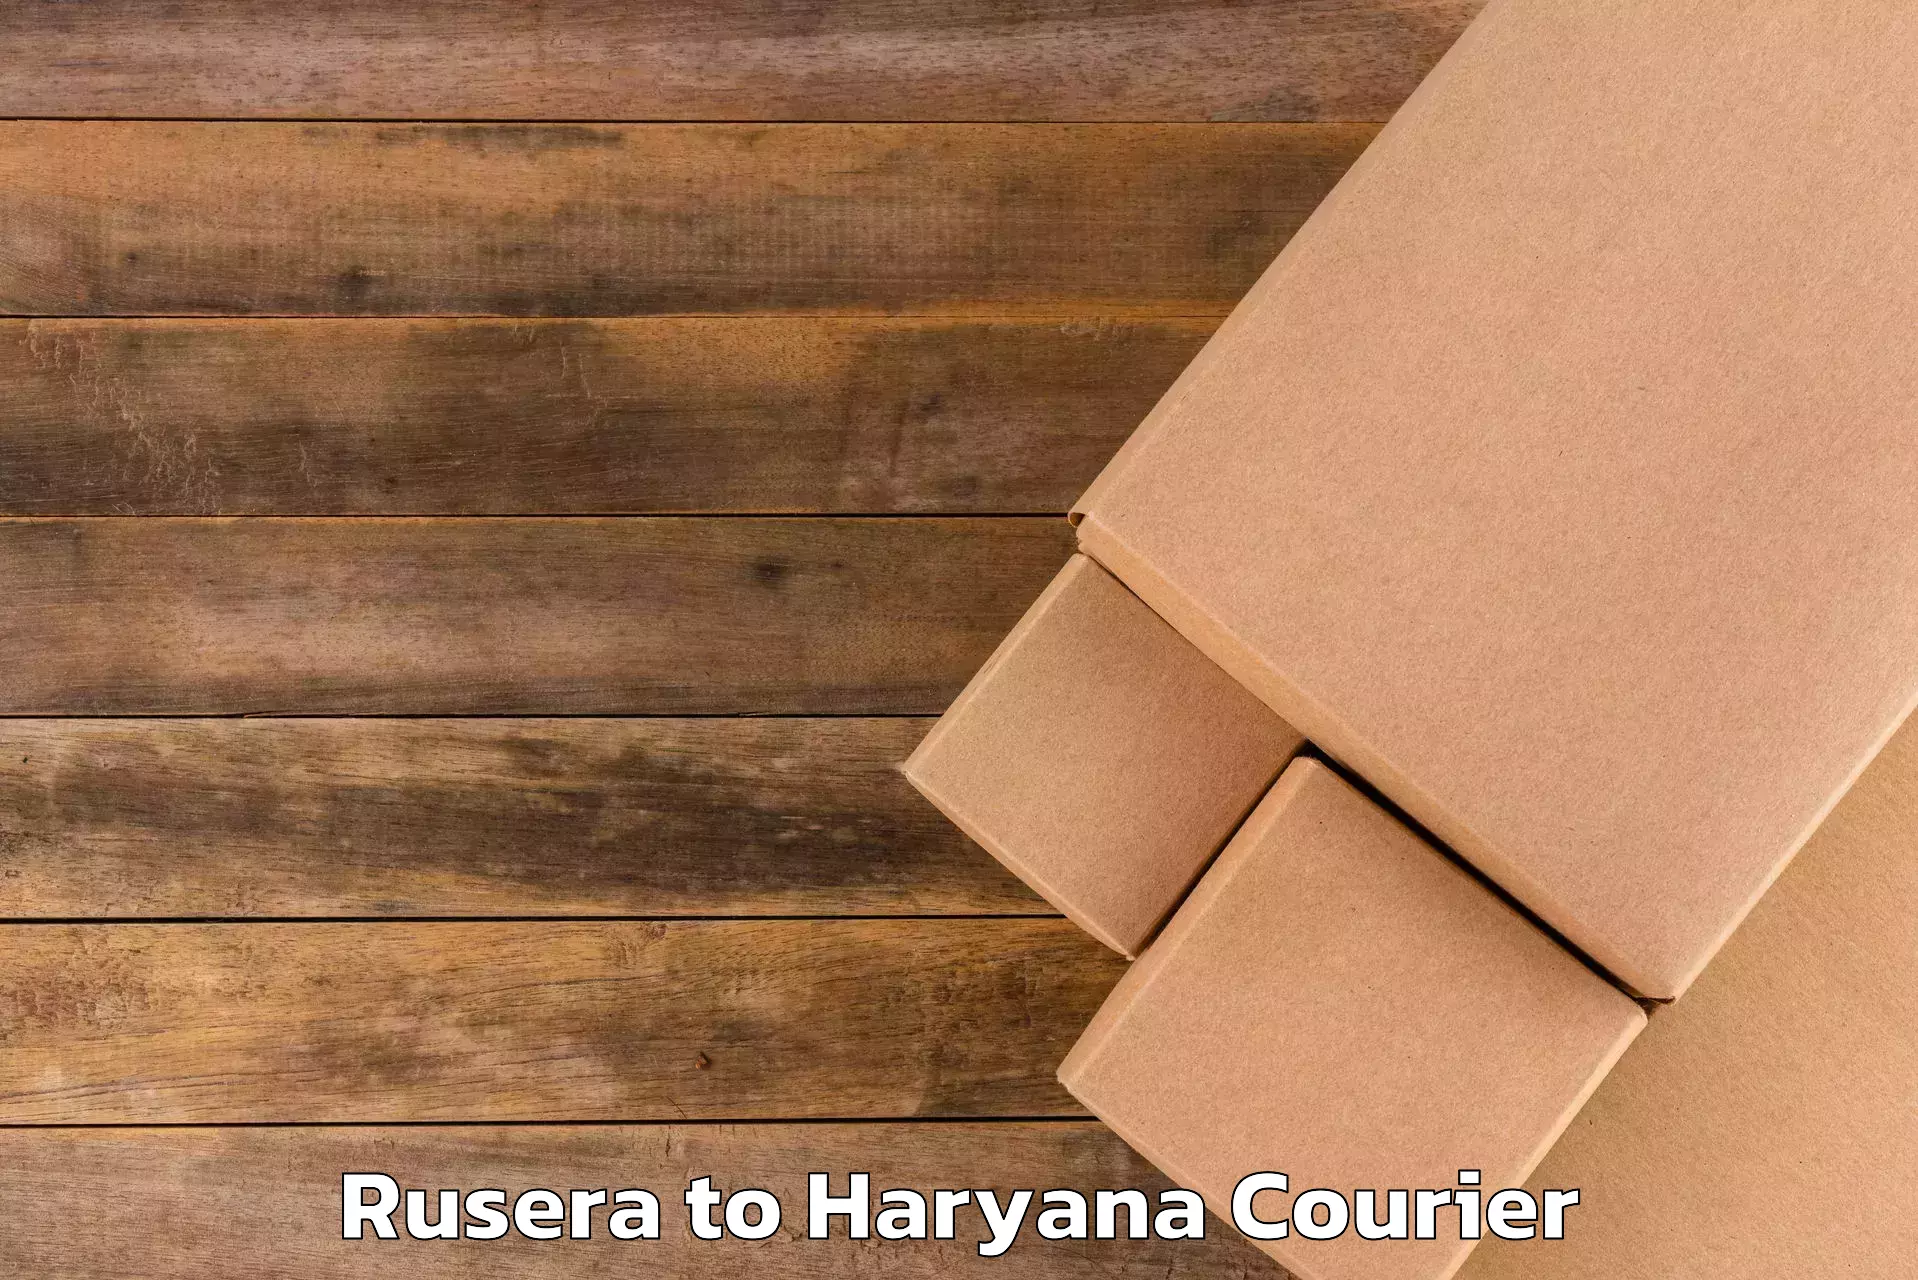 Luggage transport consultancy Rusera to Haryana